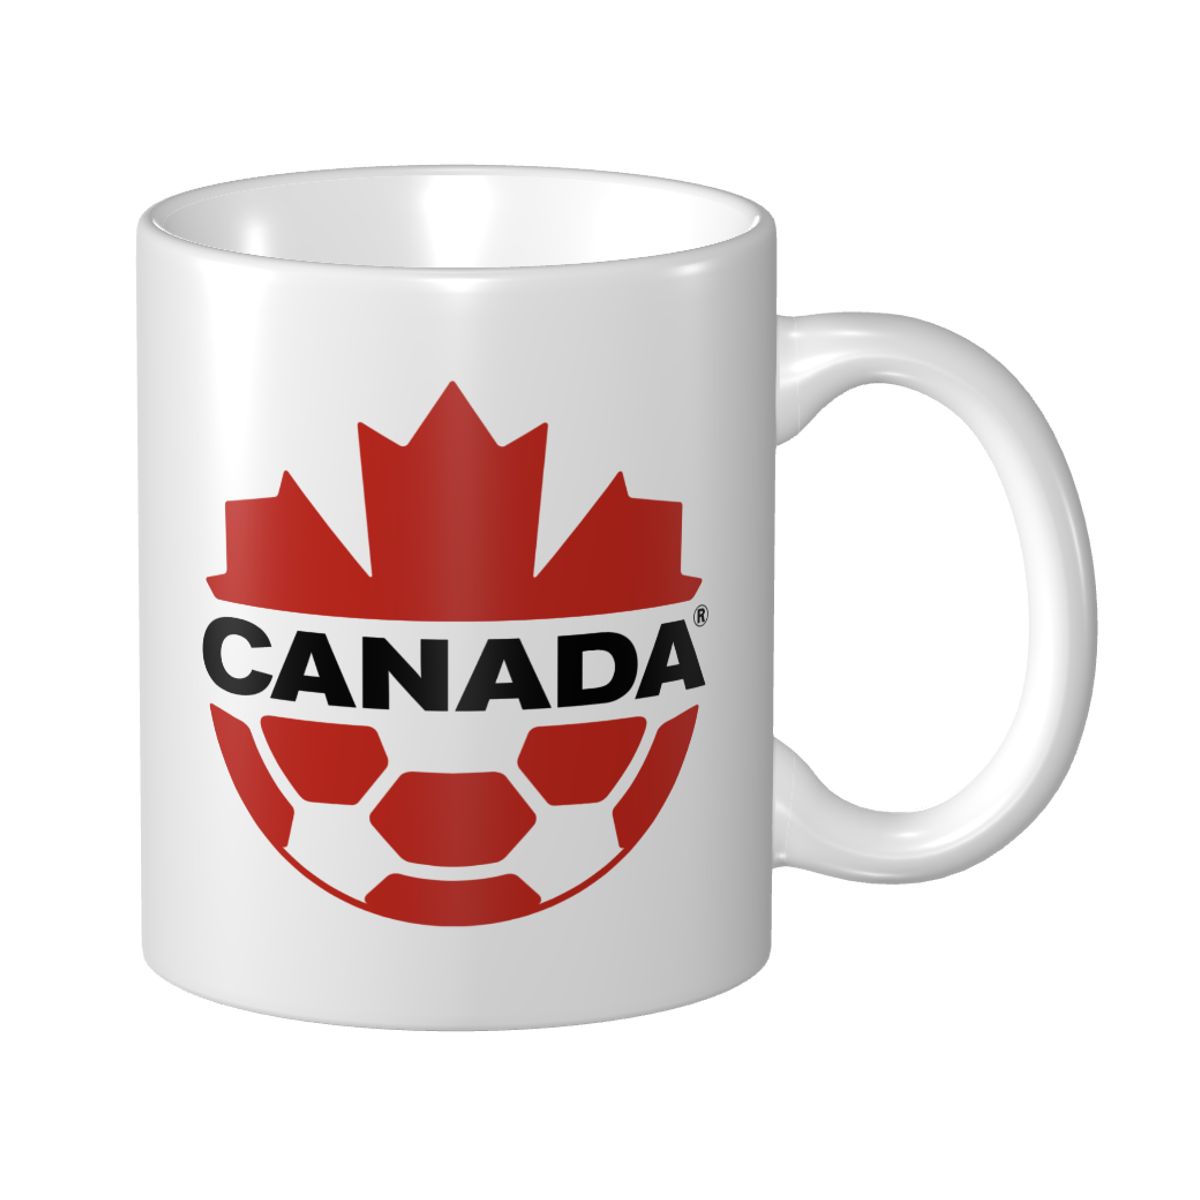 Canada National Football Team Mug